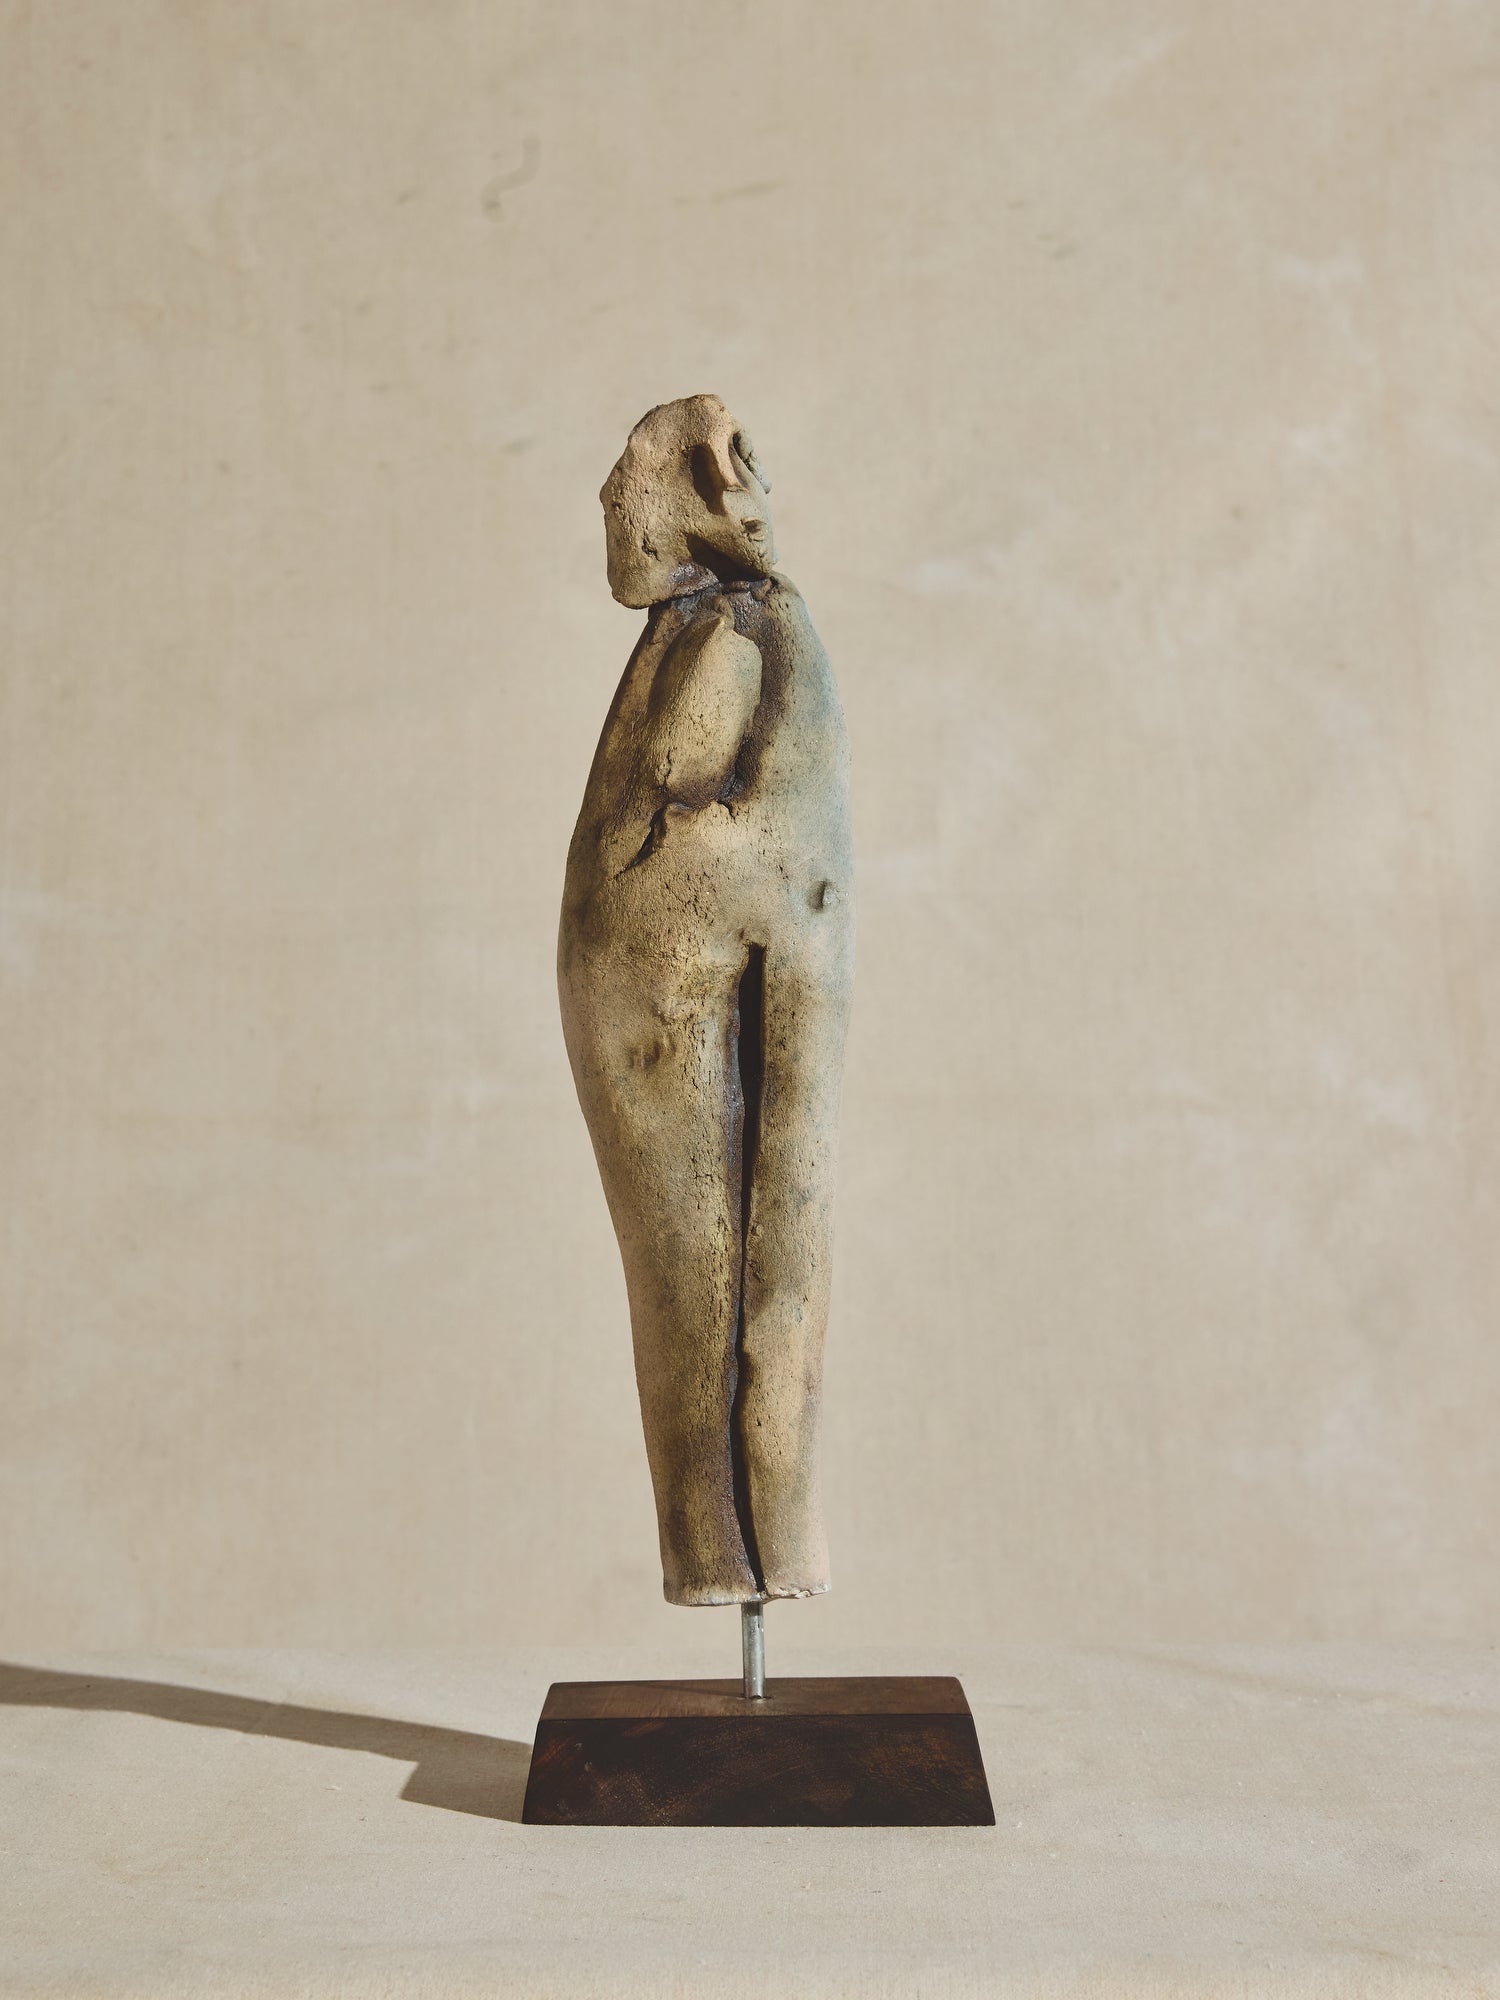 Abstract ceramic sculpture  figure on wood pedestal, artist OZwaig